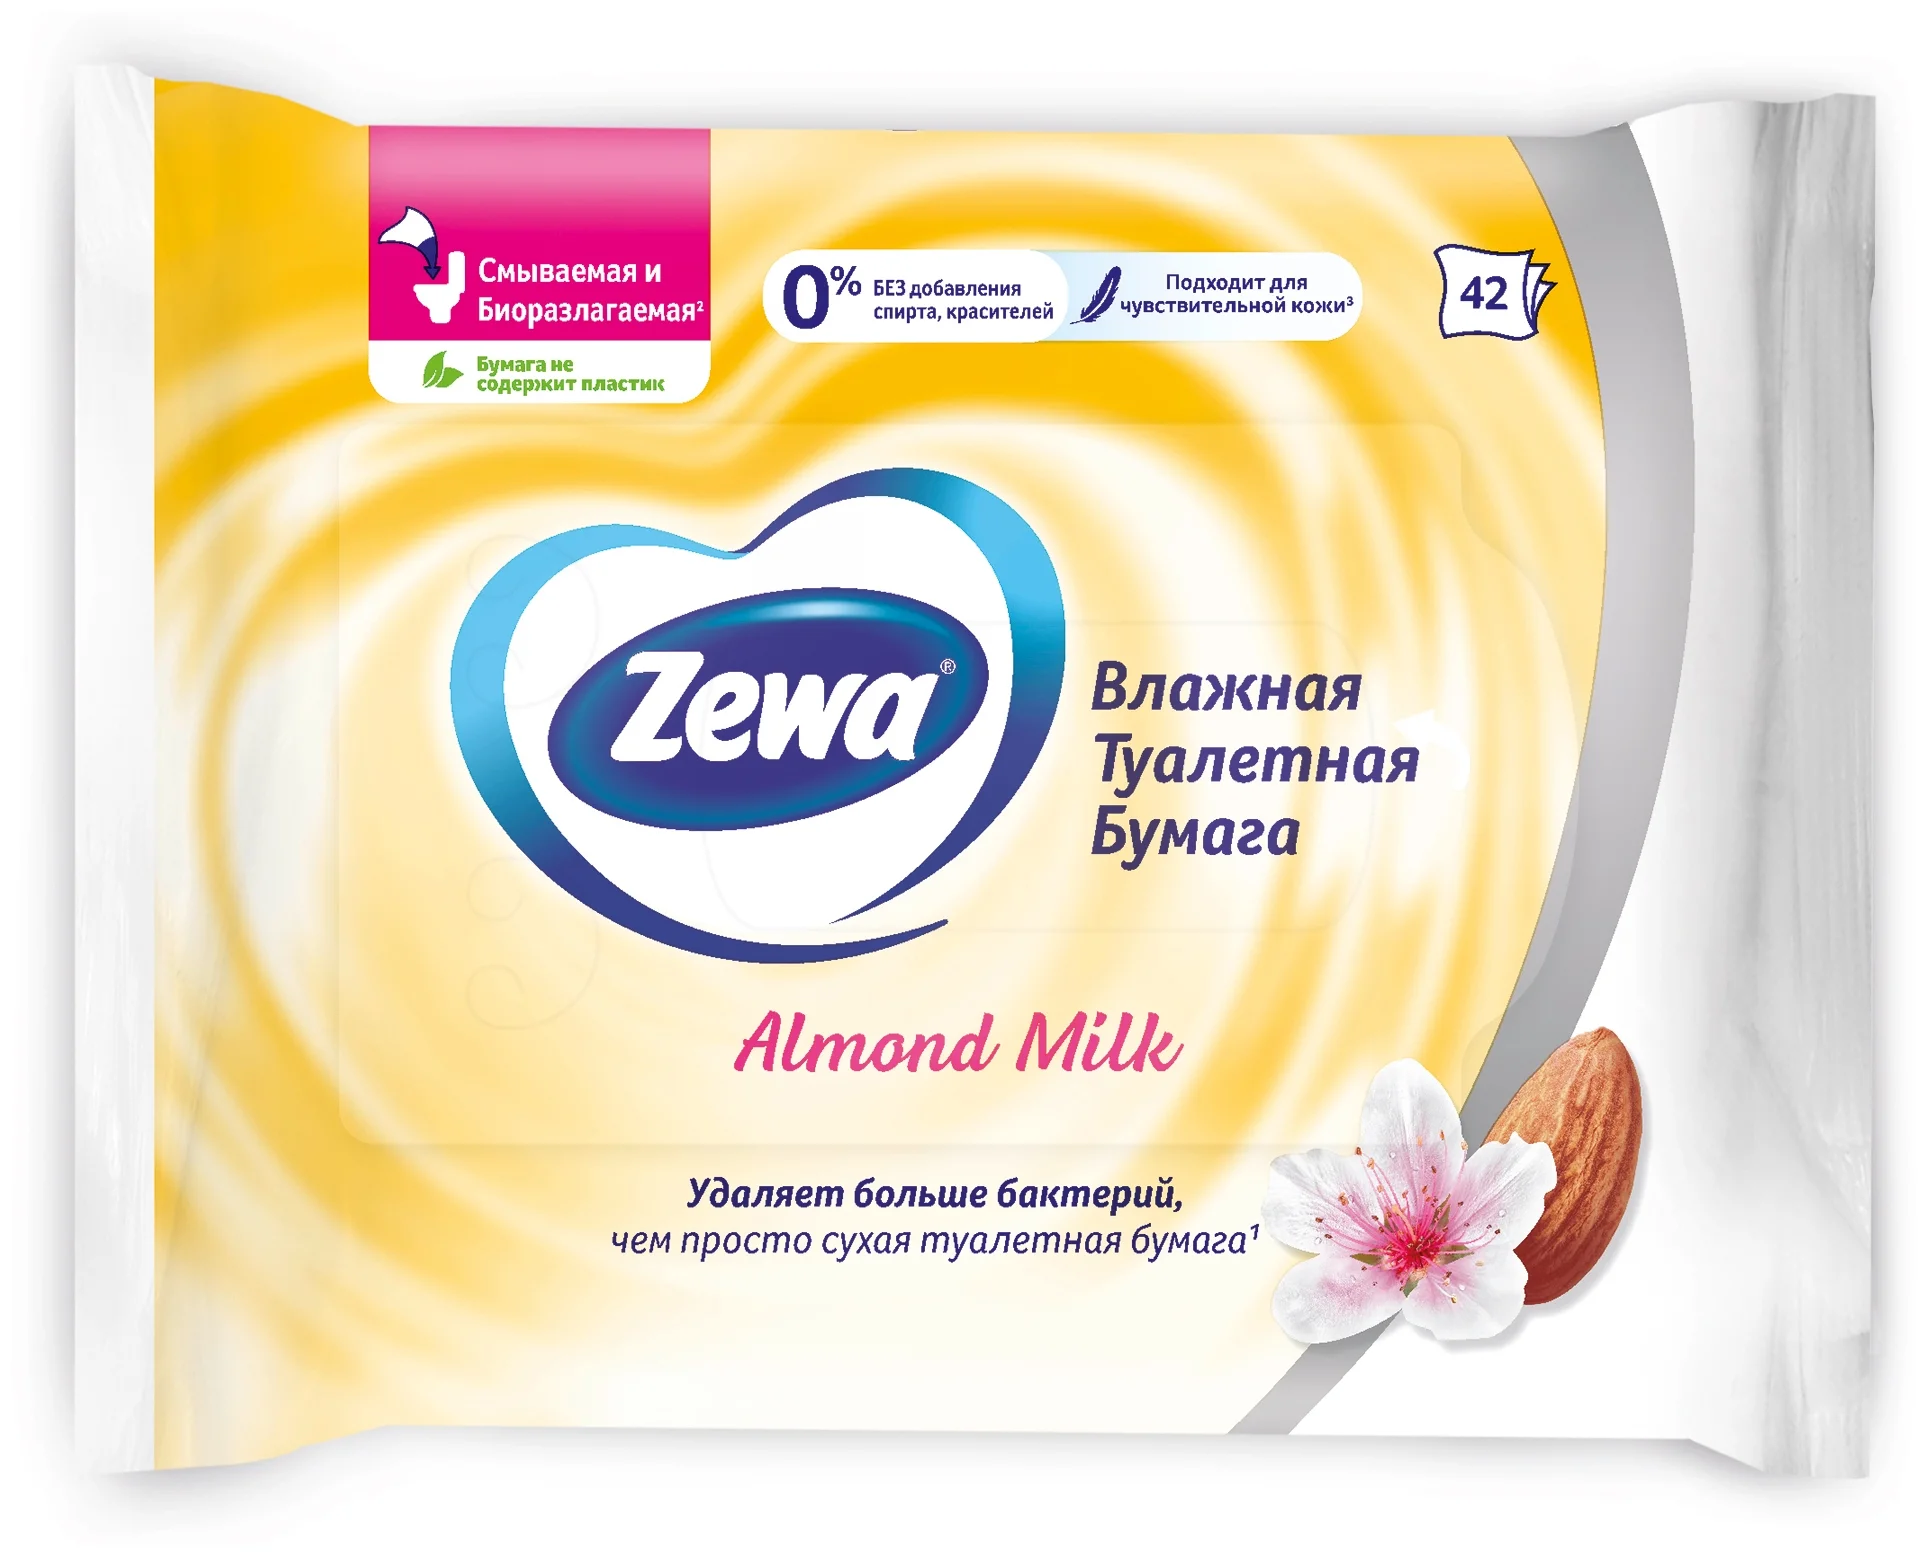 Zewa "Миндальное молочко" - экомаркировка: FSC Mix